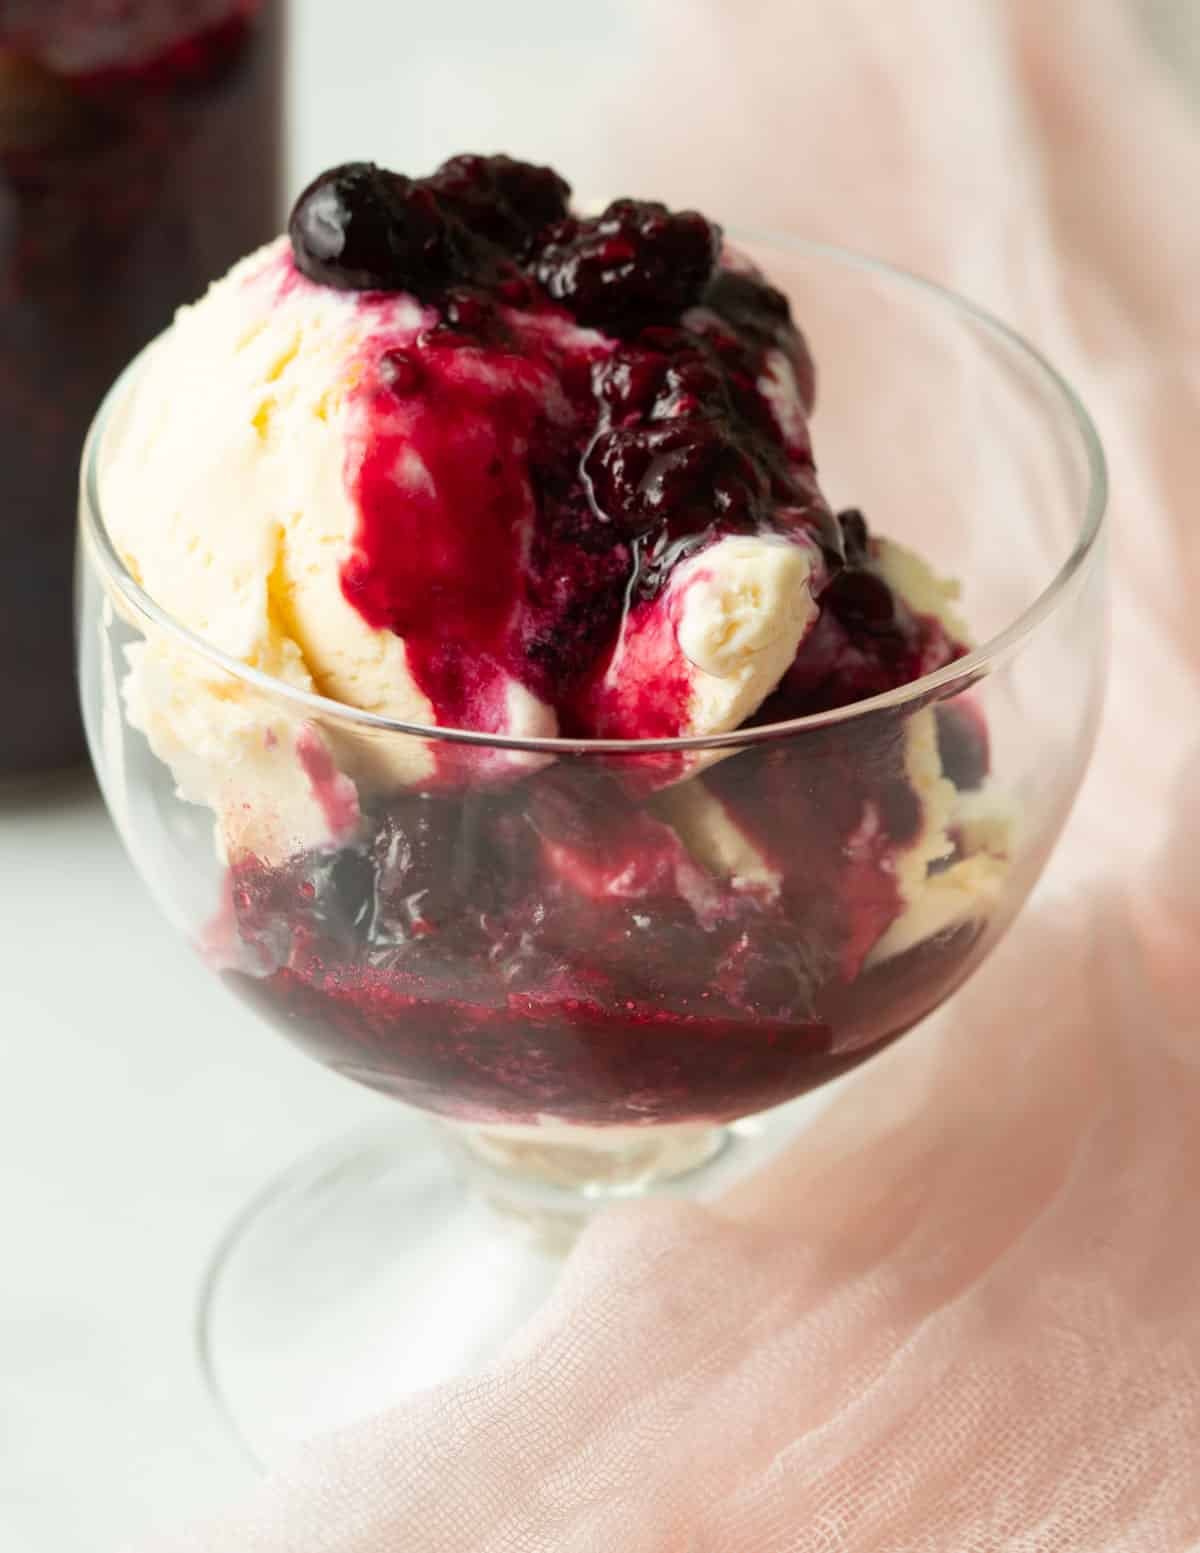 Berry compote on top of vanilla ice cream.
